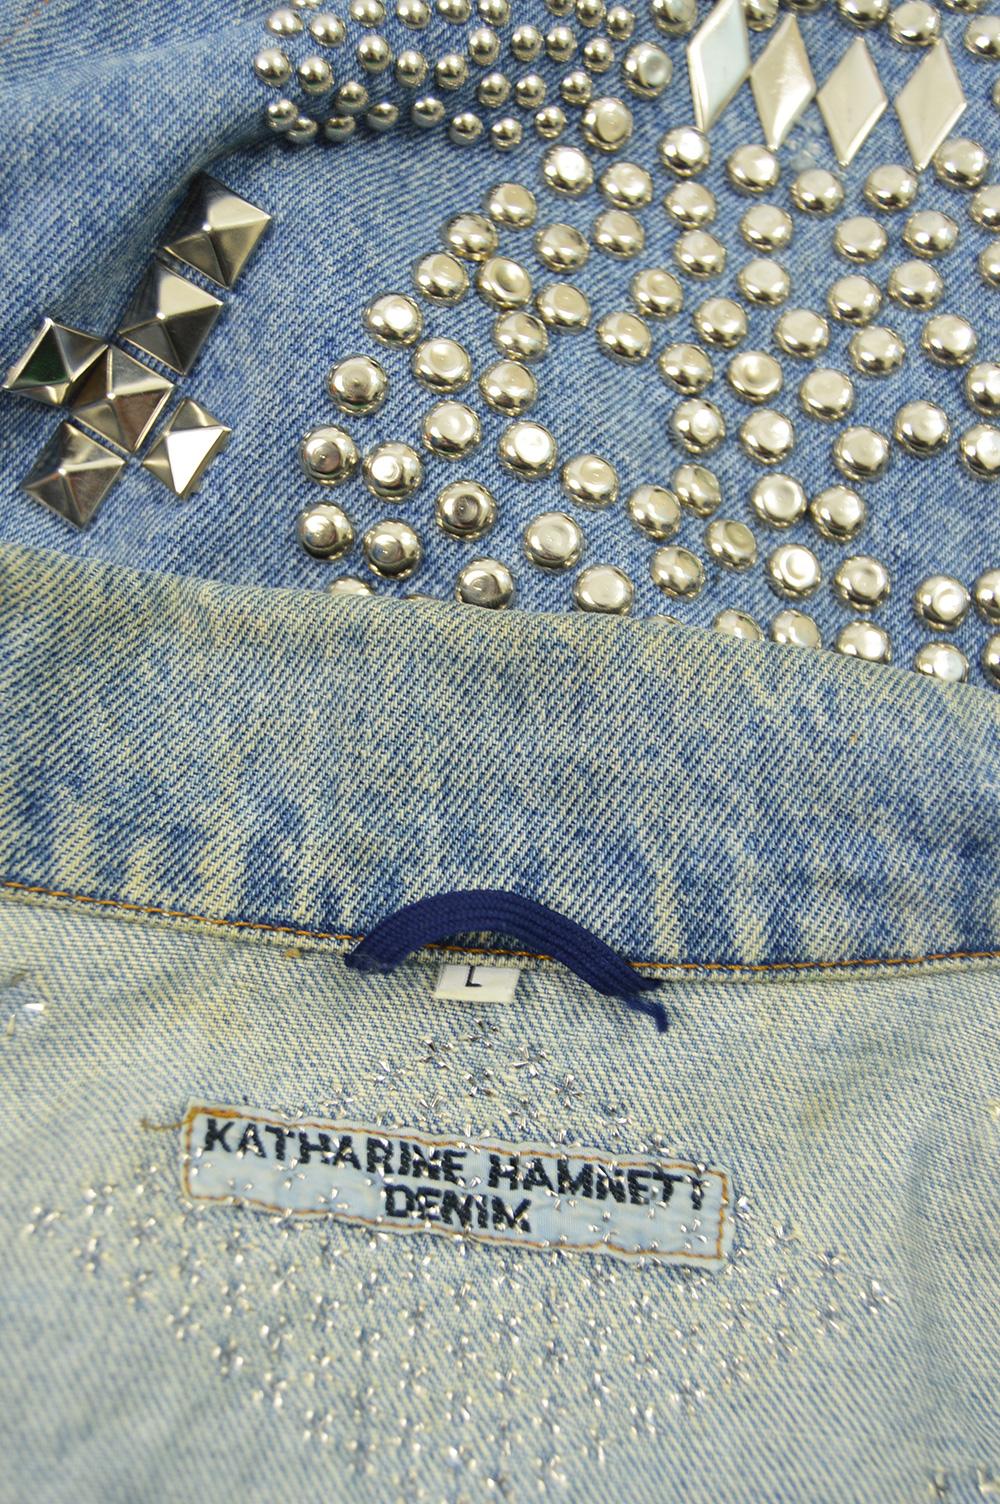 Katharine Hamnett 'Clean Up Or Die' Vintage Blue Denim Studded Jean Jacket For Sale 3